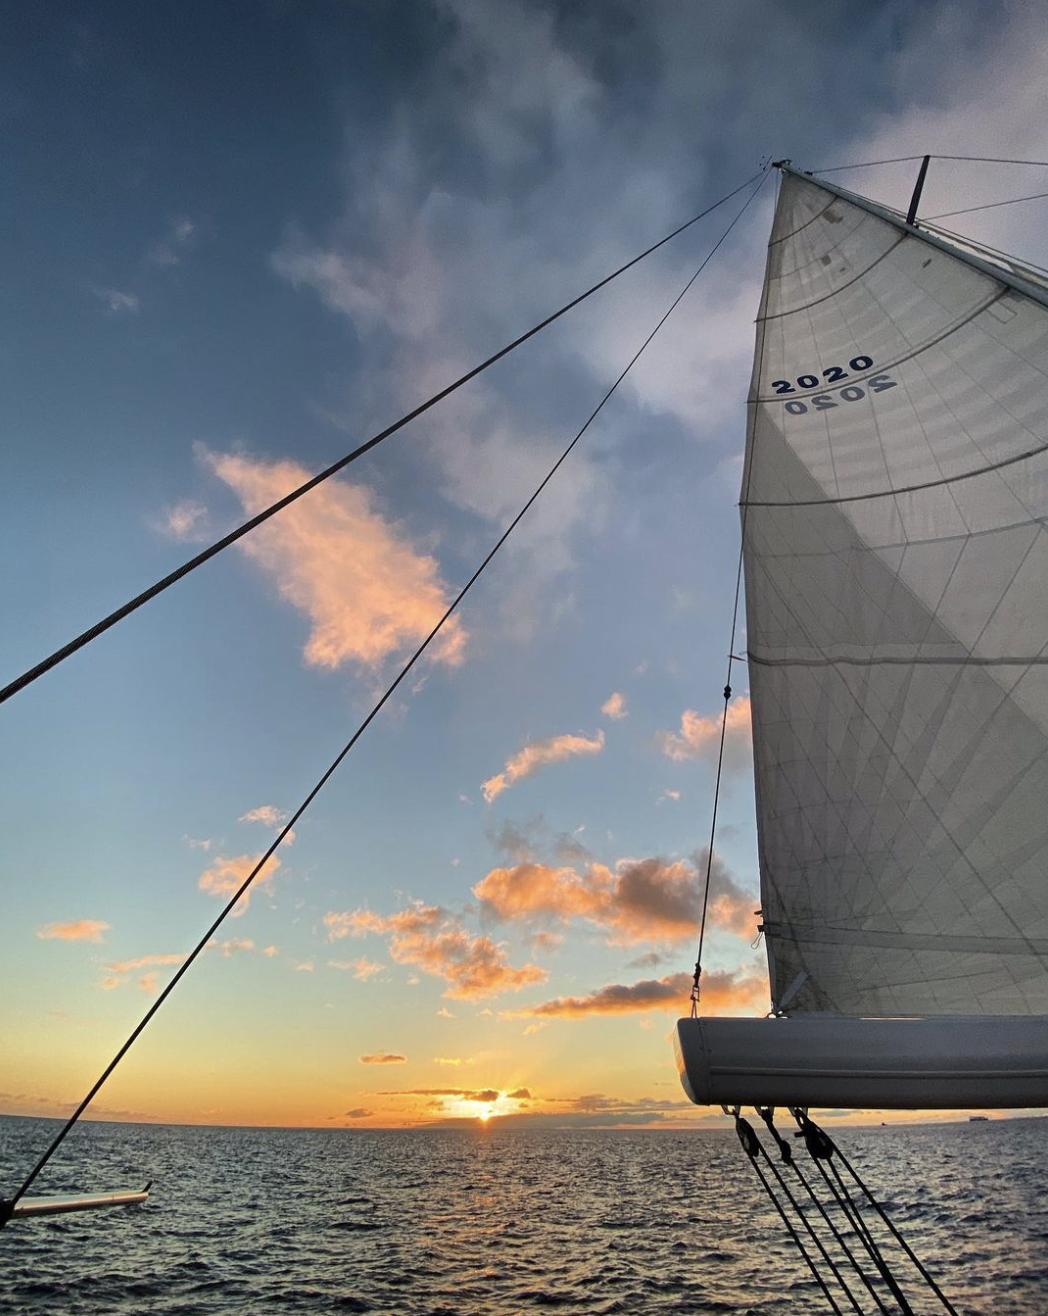 Sunset sail view